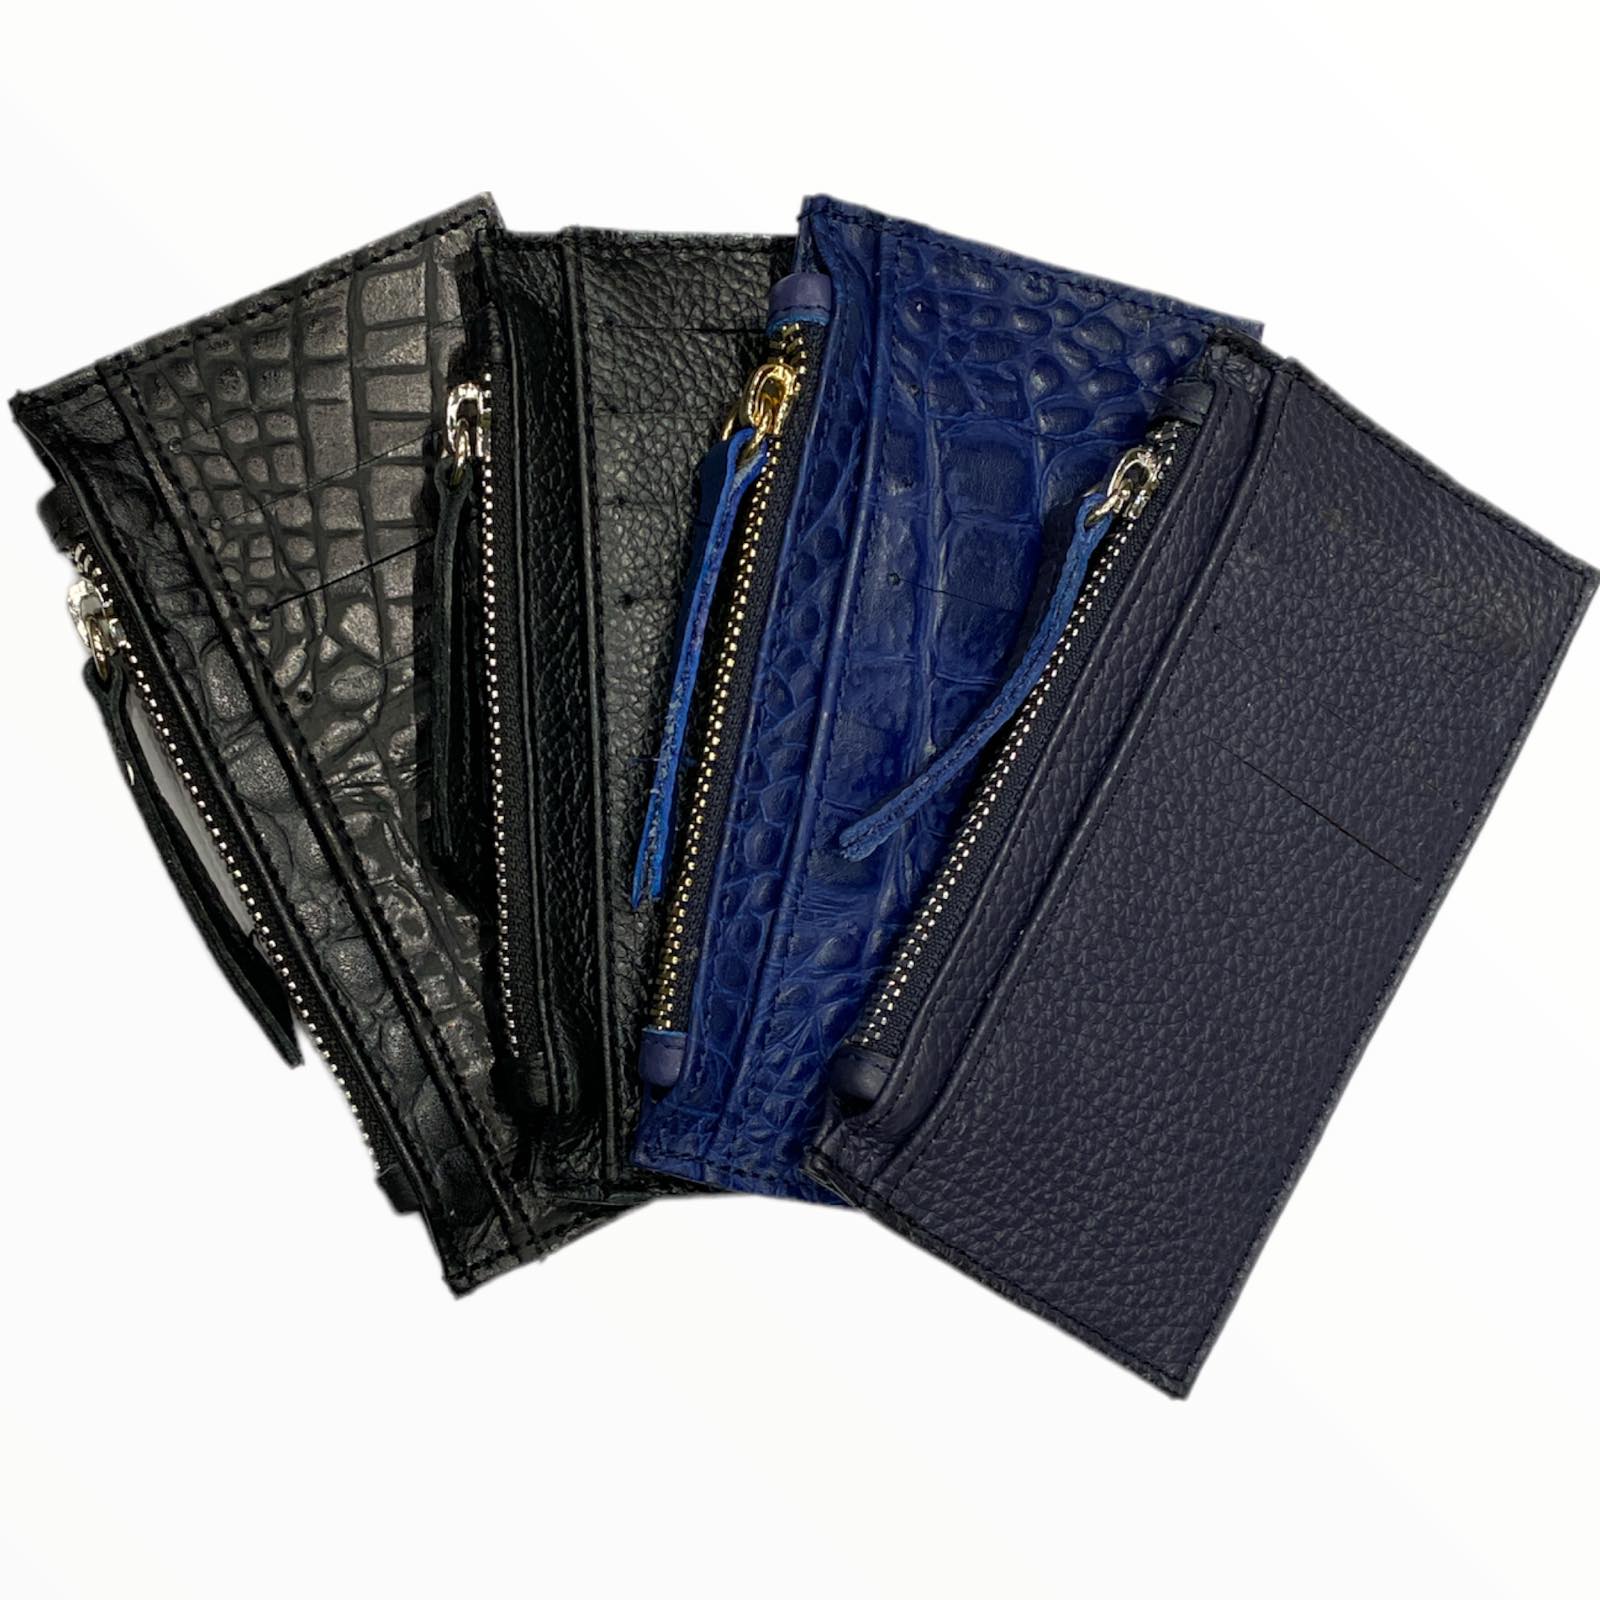 Carouzou leather flat unisex wallet